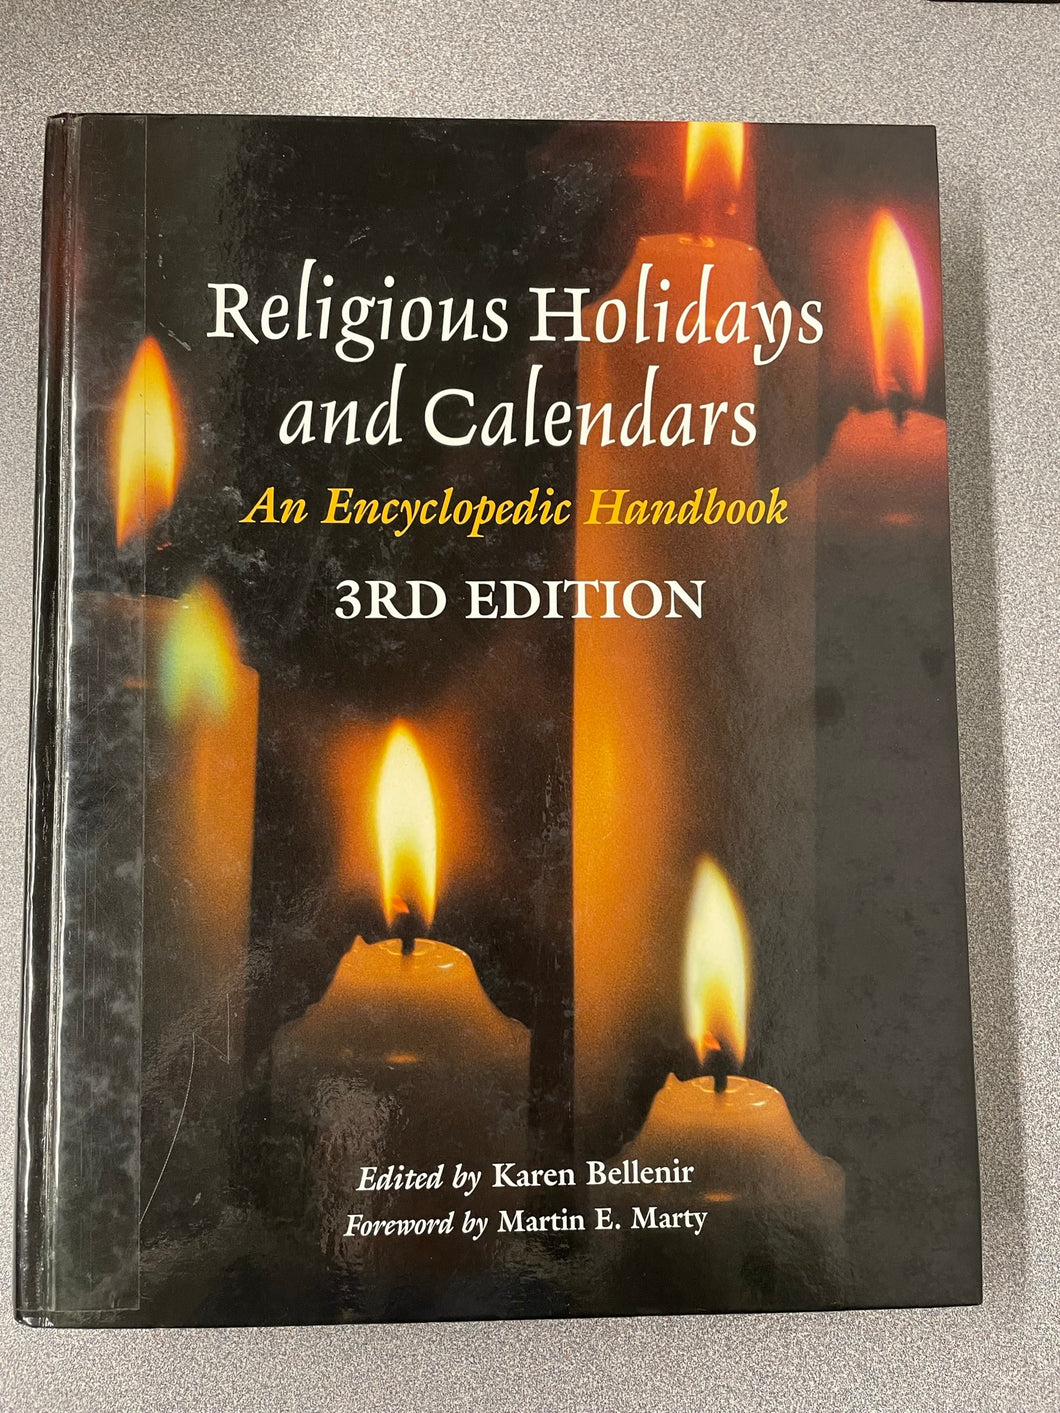 Religious Holidays and Calendars: An Encyclopedic Handbook, 3rd Edition, Bellenir, Karen, ed. [2004] REF 6/23